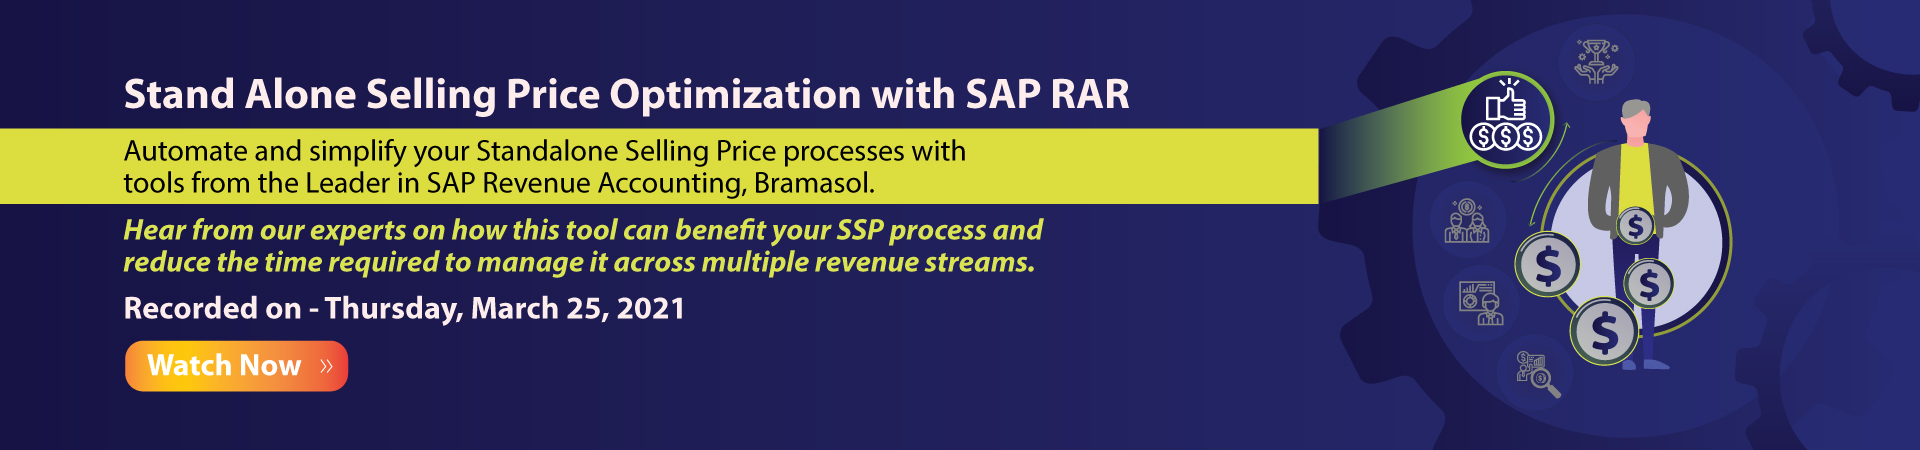 SAP Revenue Accounting Banner